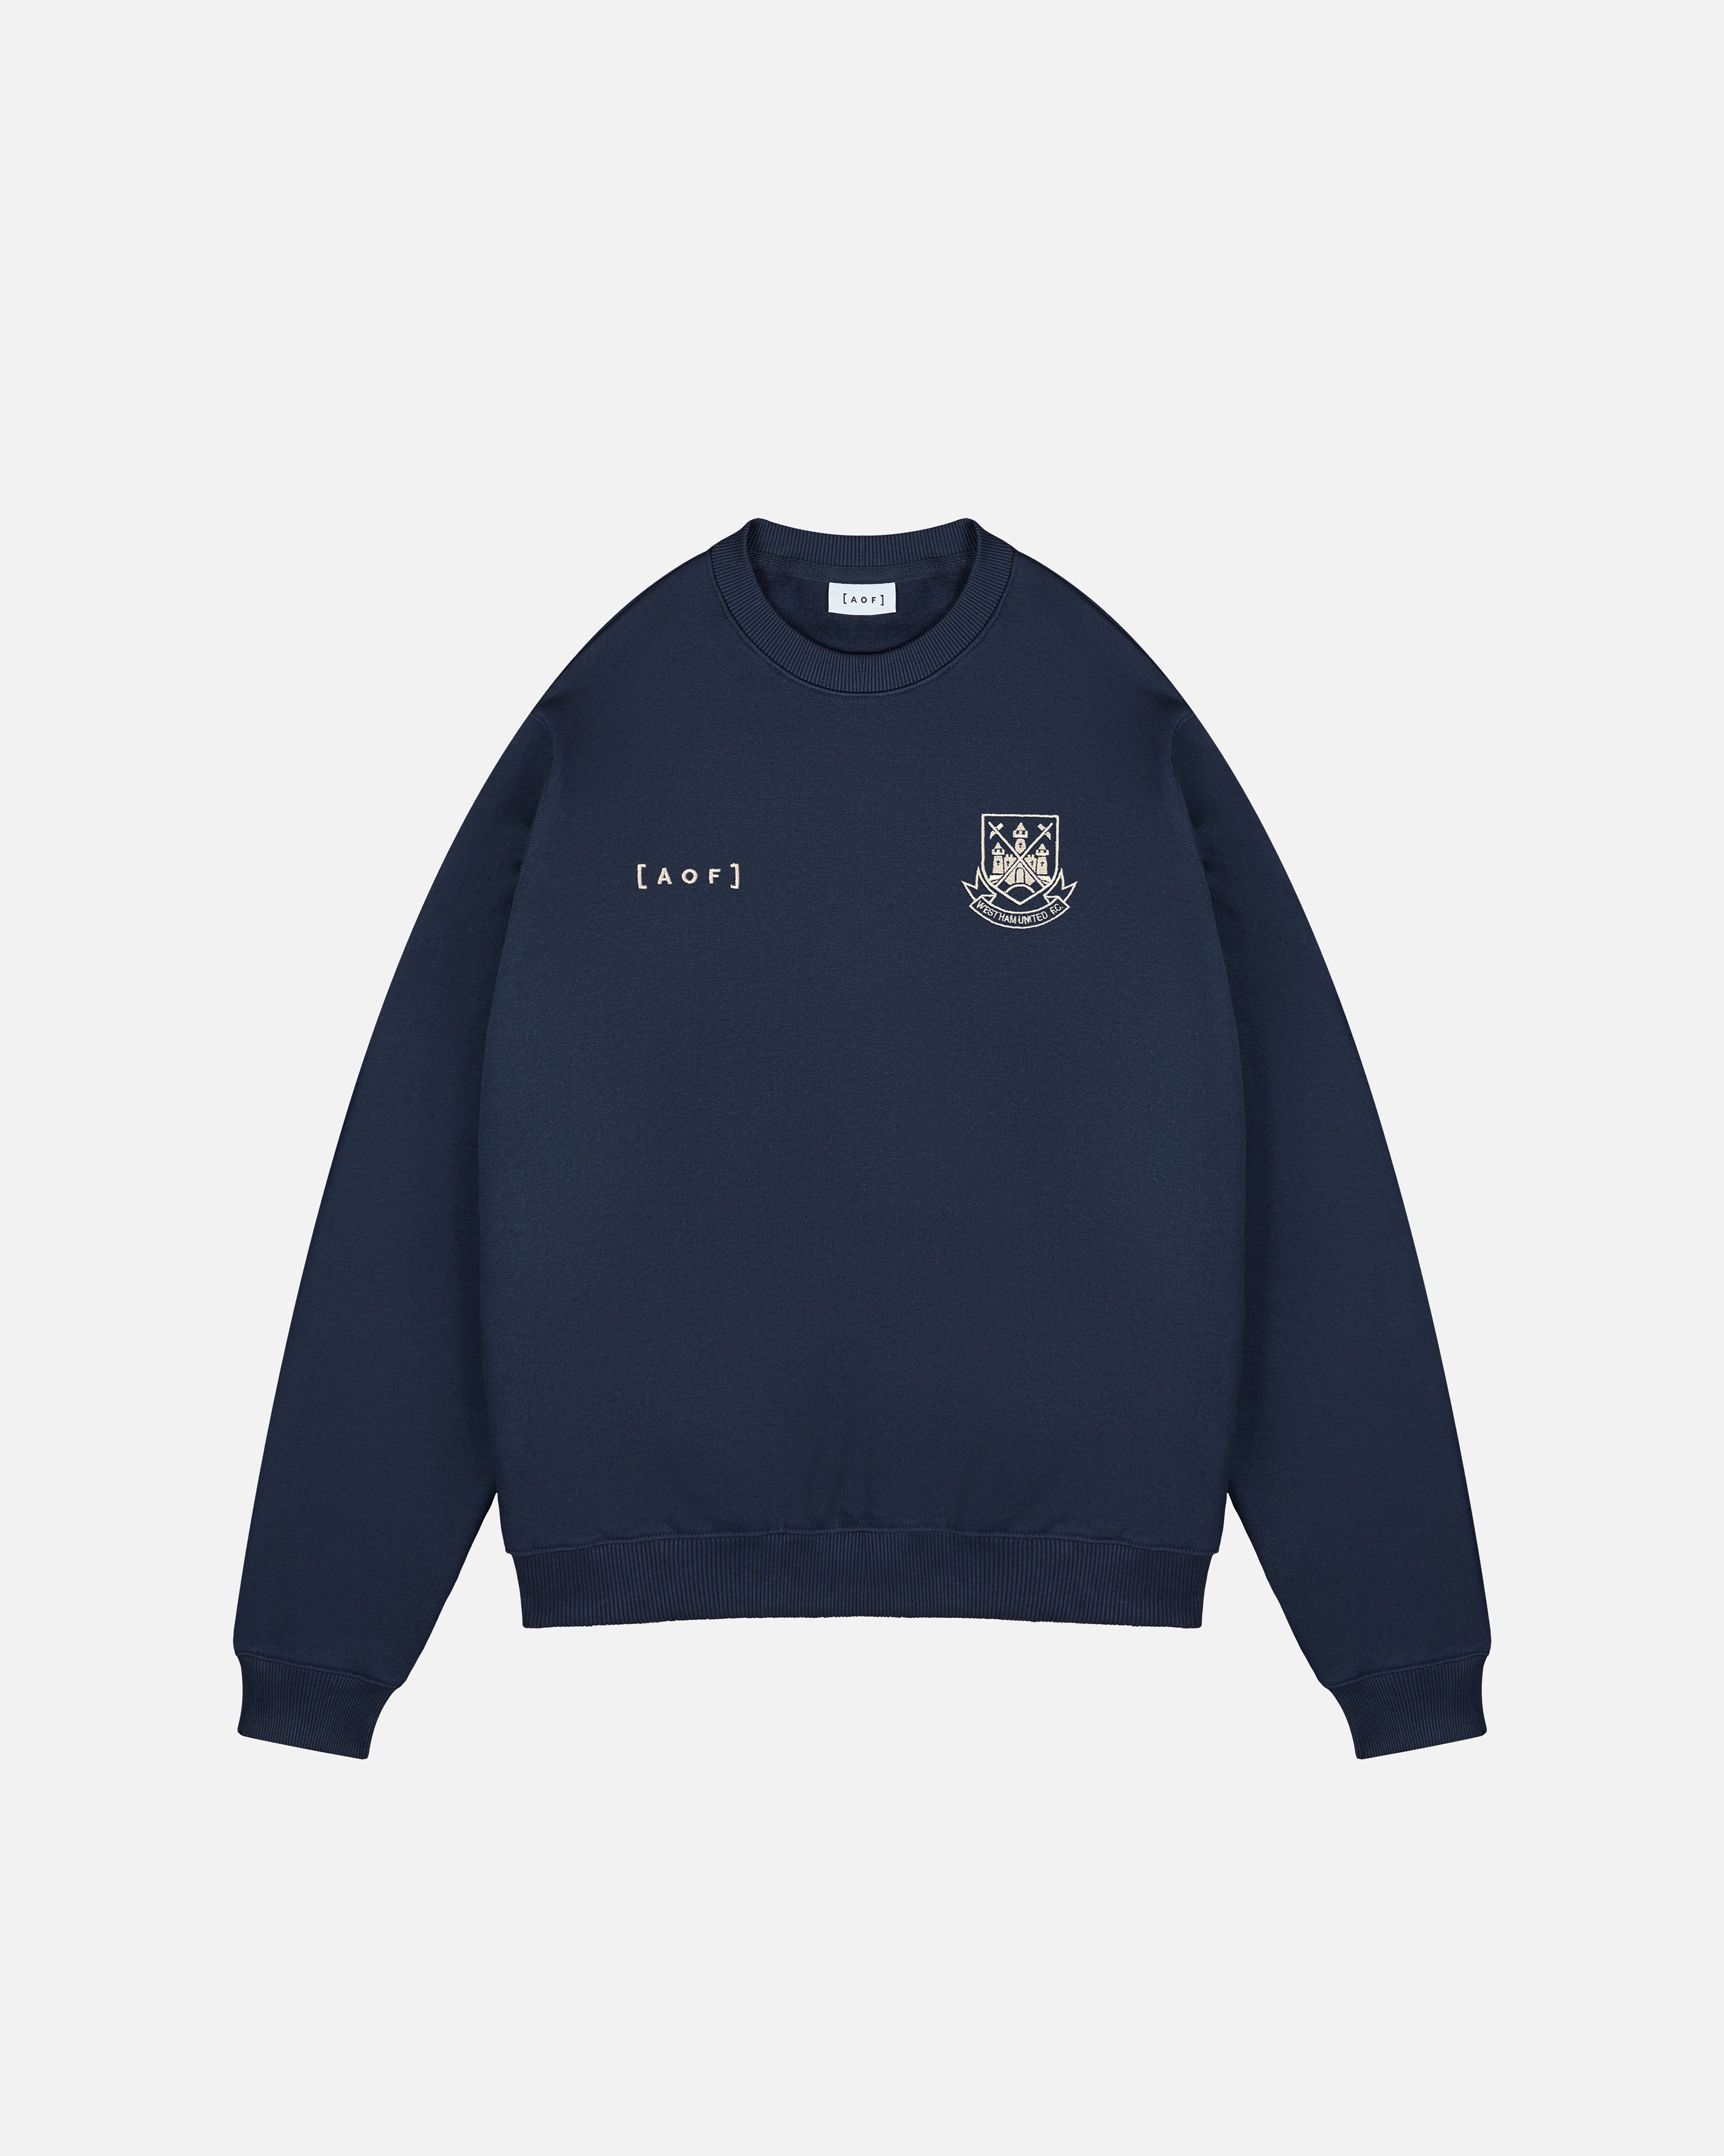 West Ham x AOF Navy Sweatshirt